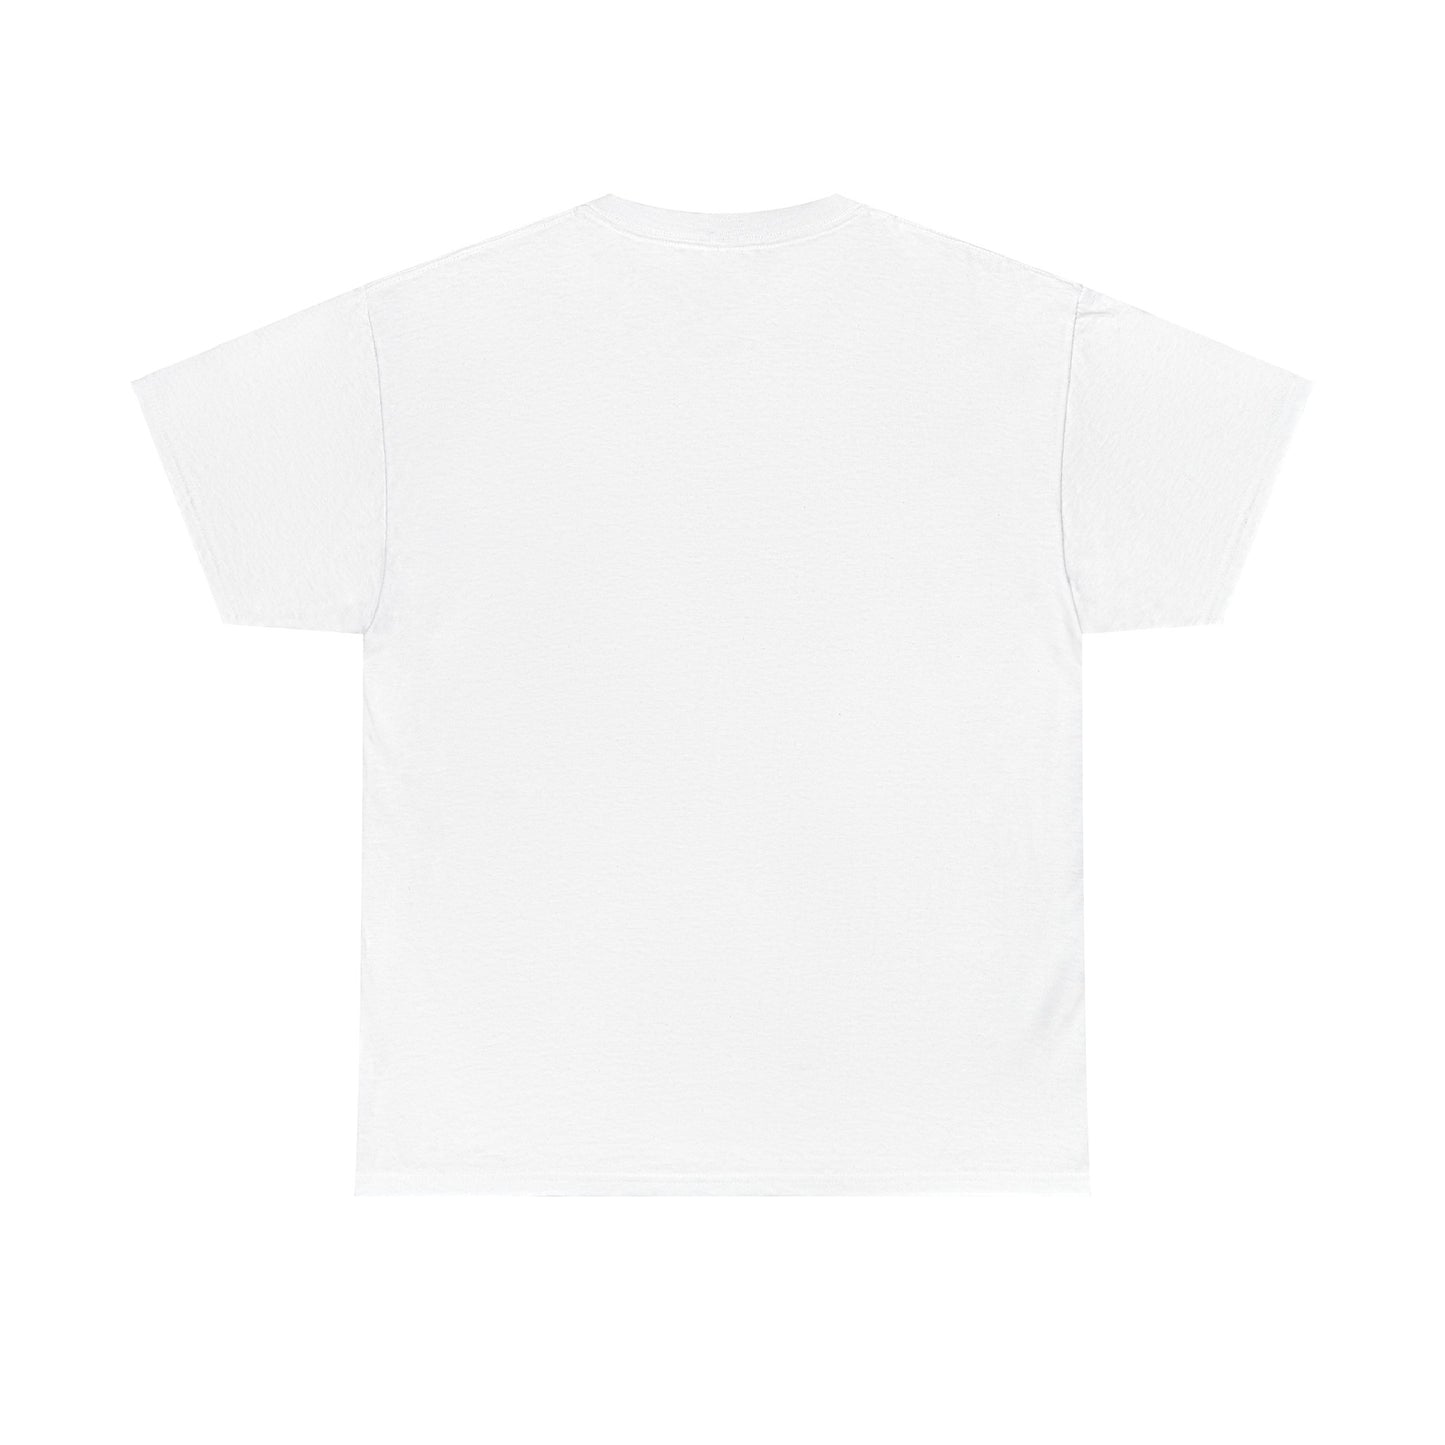 "Kochief" T-shirt